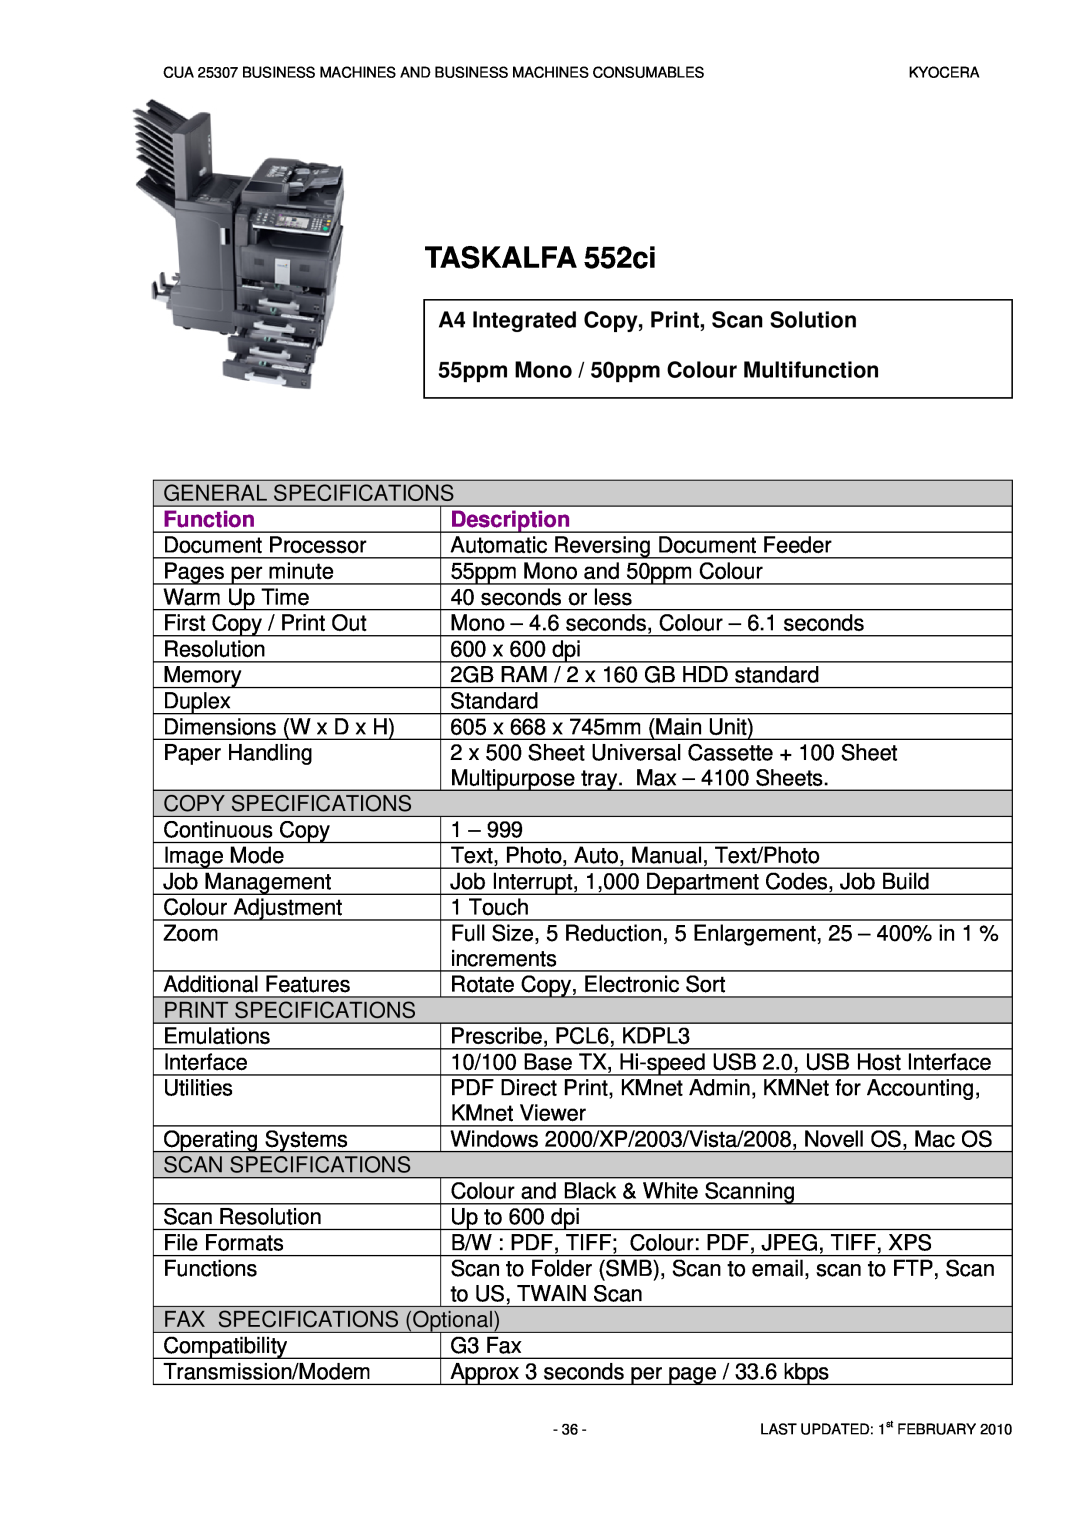 Kyocera CUA 25307 manual TASKALFA 552ci, A4 Integrated Copy, Print, Scan Solution, 55ppm Mono / 50ppm Colour Multifunction 